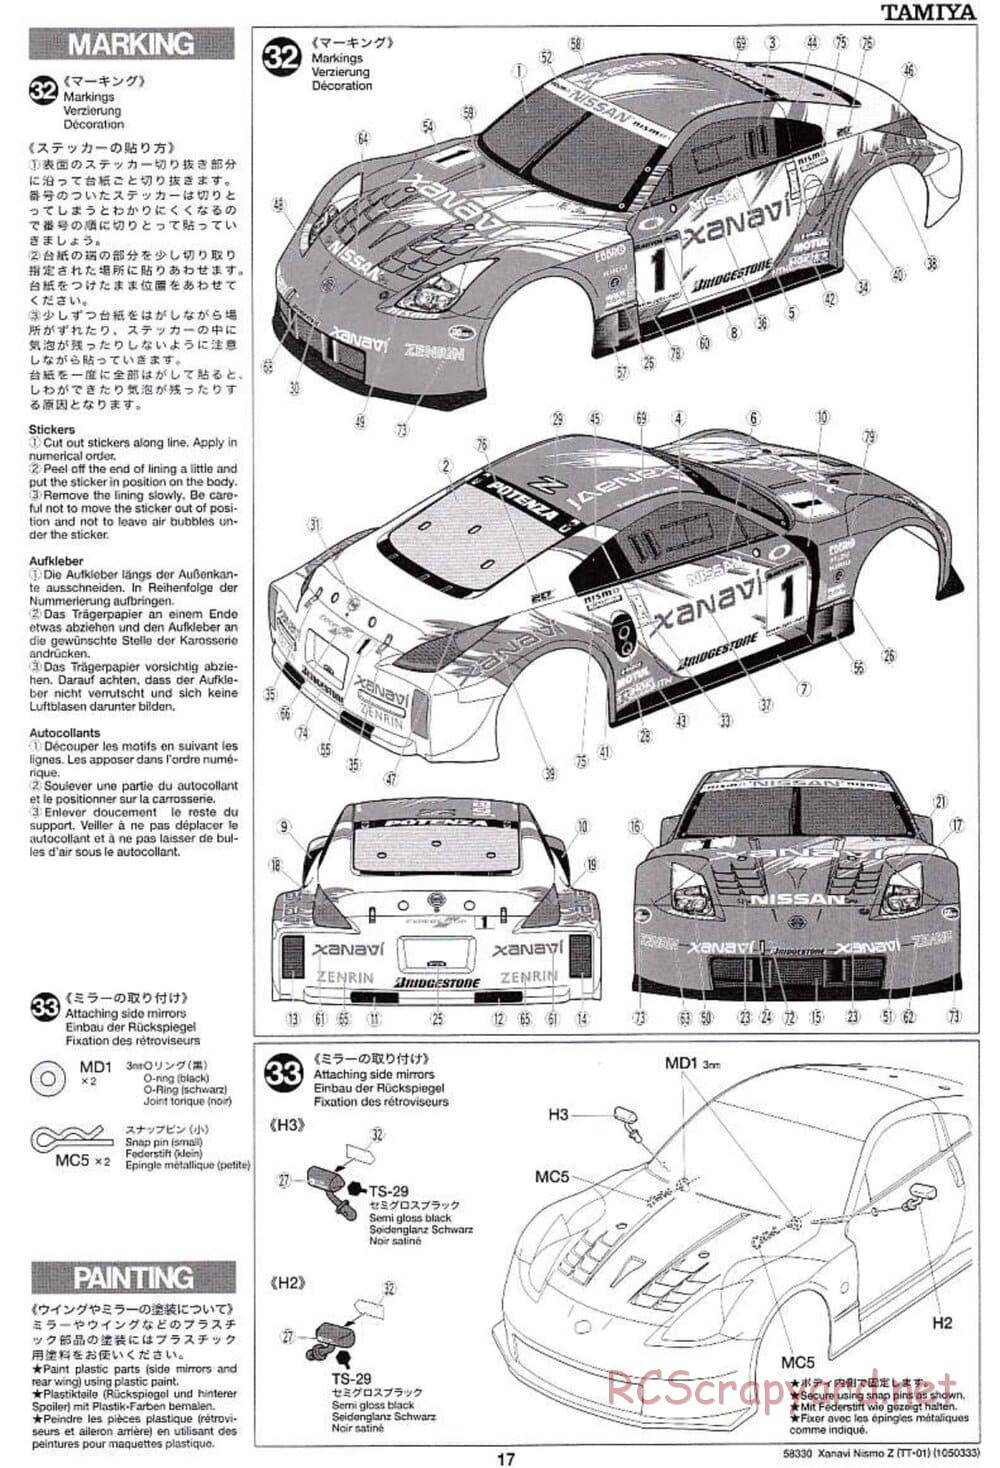 Tamiya - Xanavi Nismo Z - TT-01 Chassis - Manual - Page 17